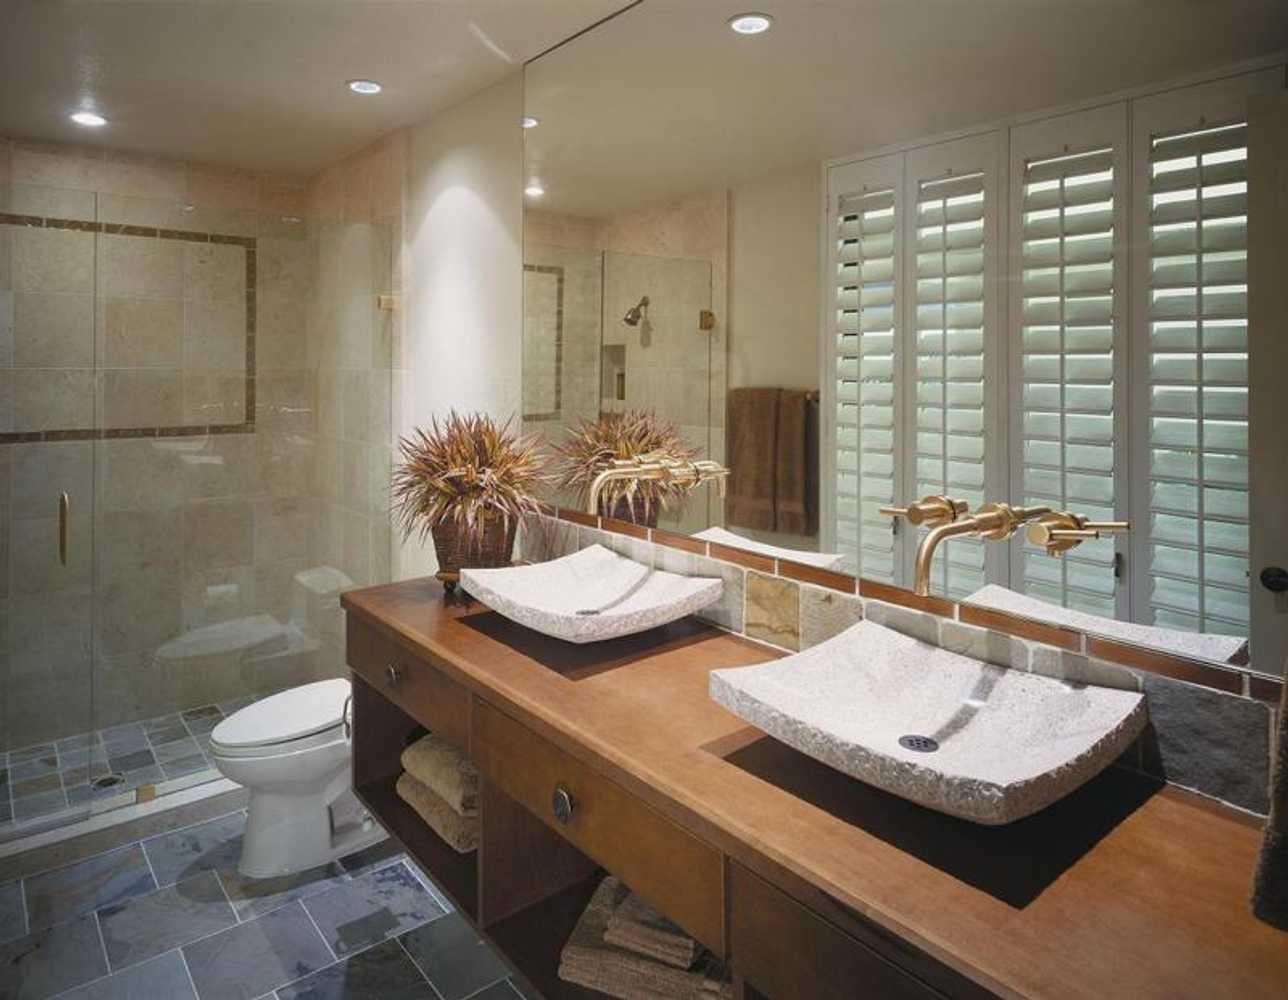 Bathroom Remodels by America's Advantage Remodeling